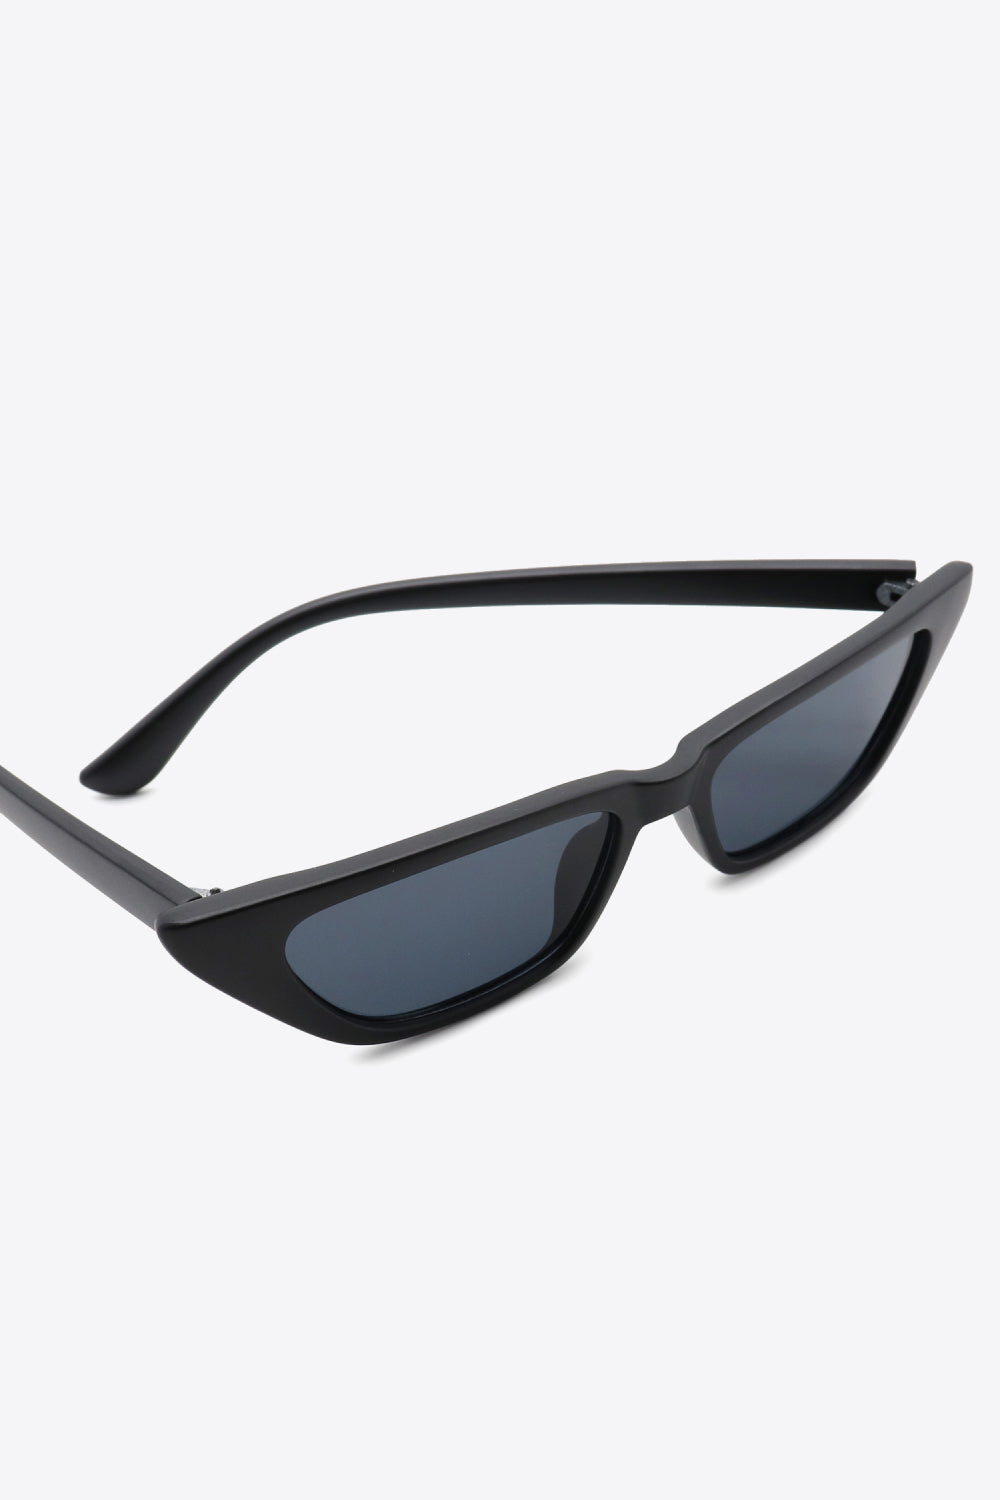 UV400 Polycarbonate Cat Eye Sunglasses - Sunglasses - FITGGINS